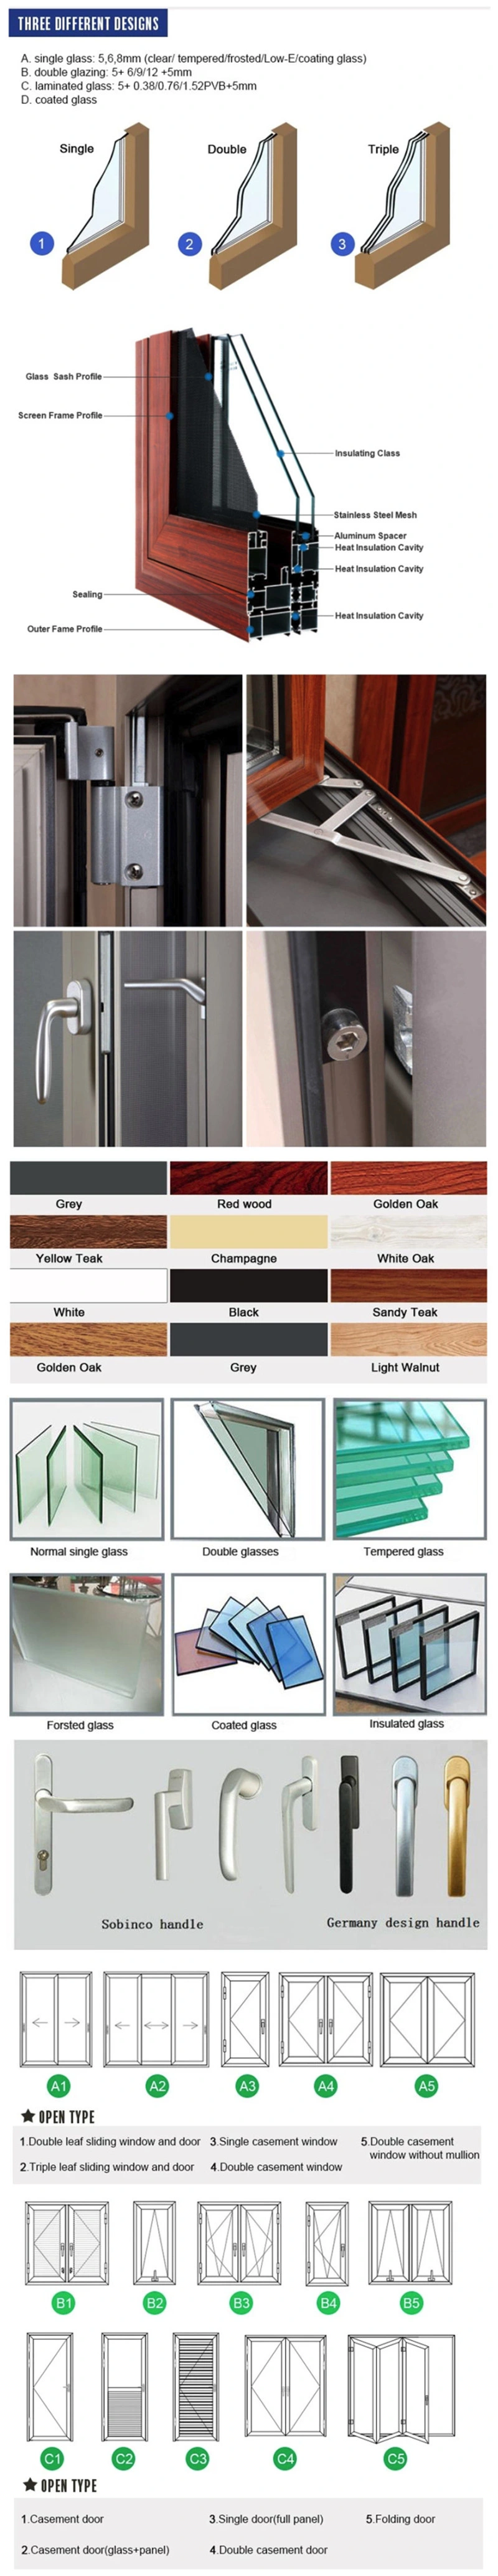 High Quality Energy Saving Swing Aluminum-Alloy Window Casement Windows